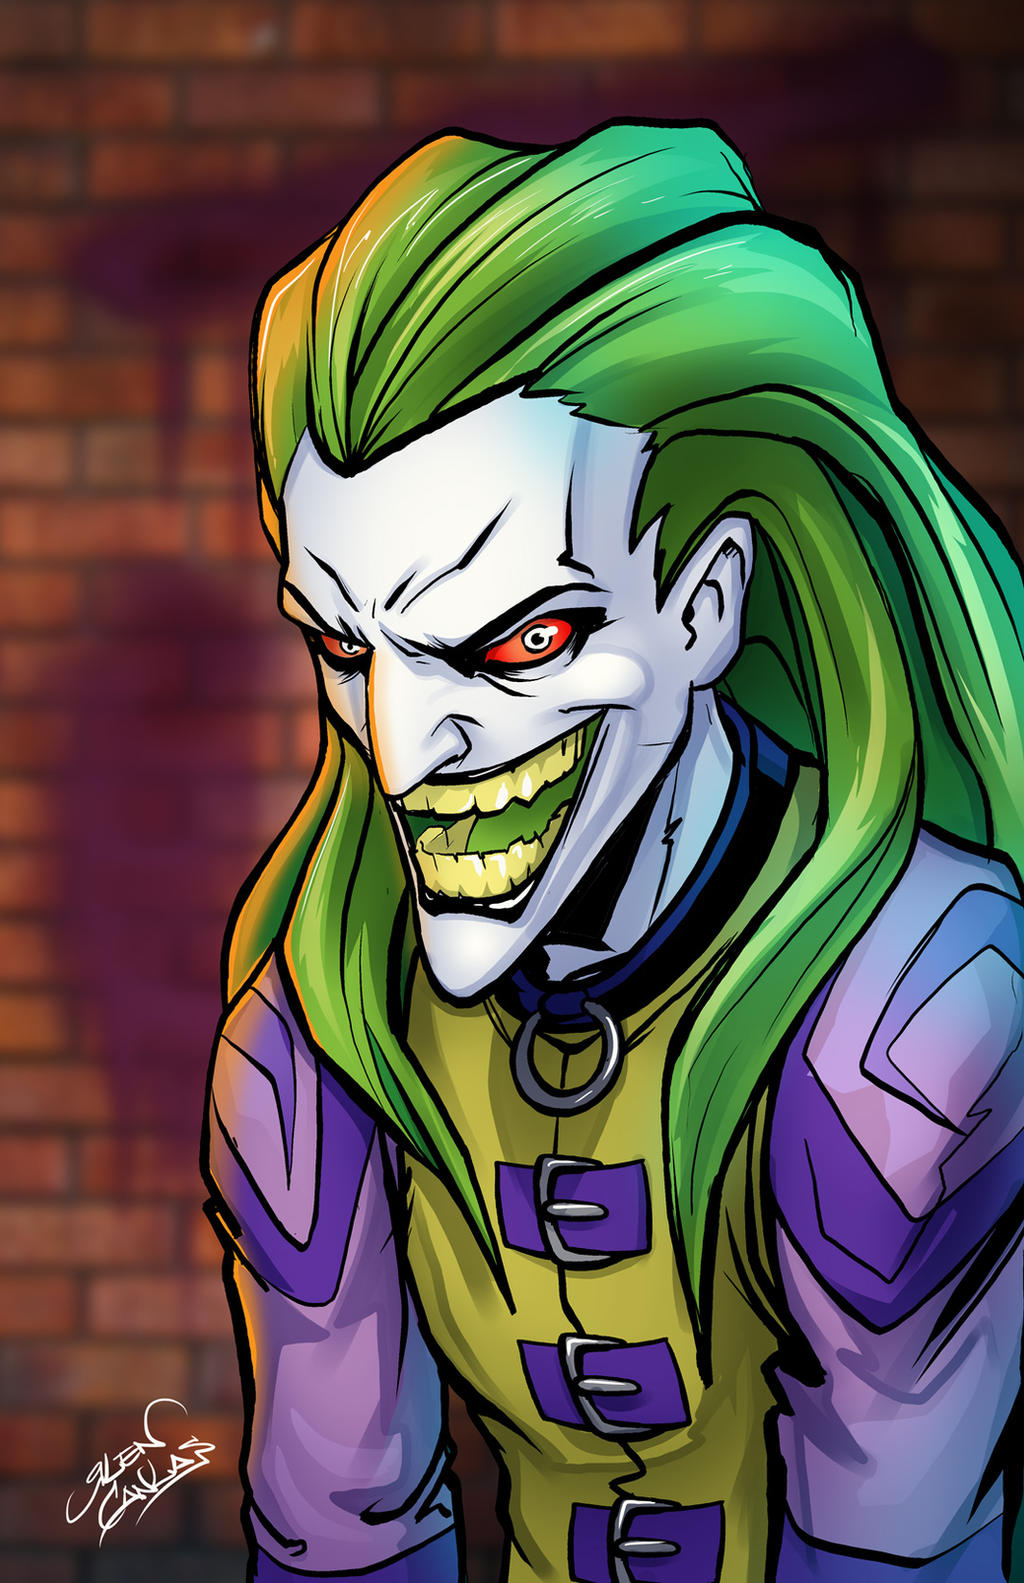 joker design from the batman animated series by glencanlas on DeviantArt